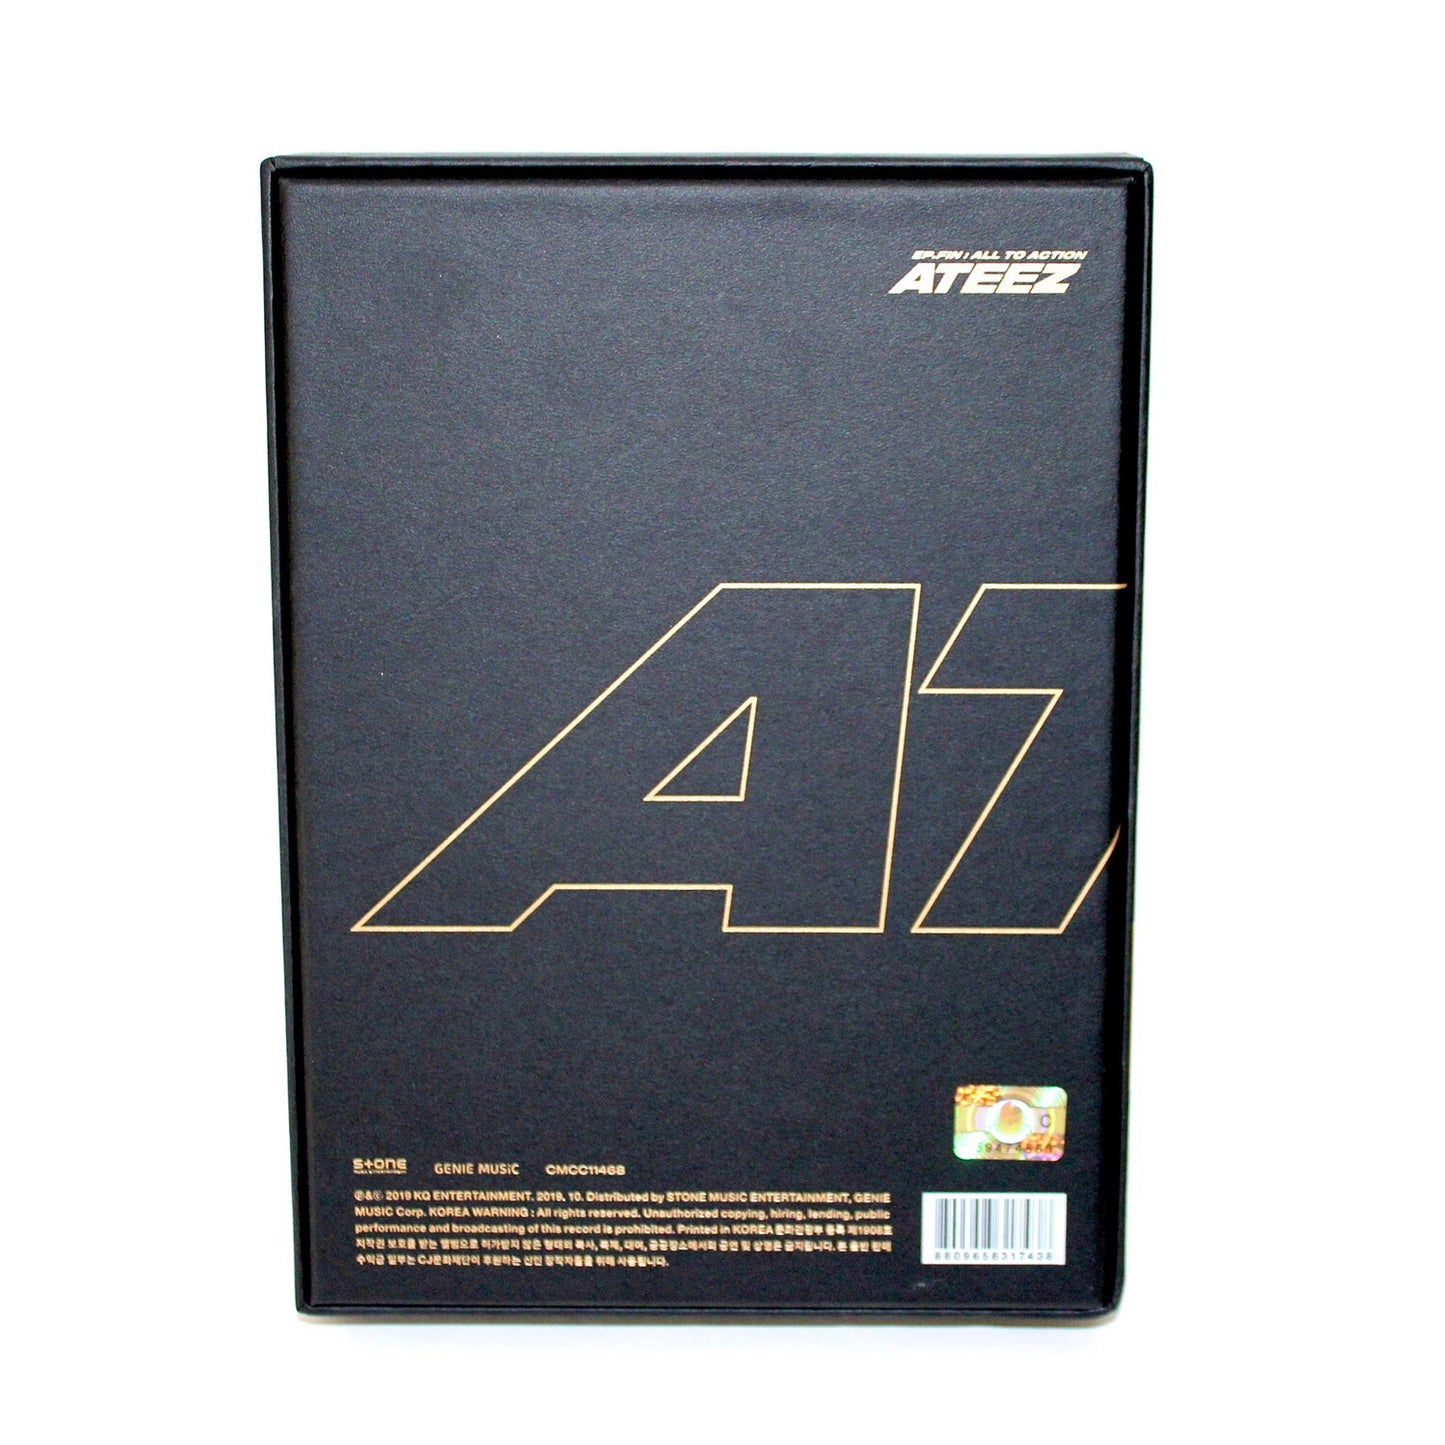 ATEEZ 1st Album - Treasure EP.Fin: All to Action | Une ver.